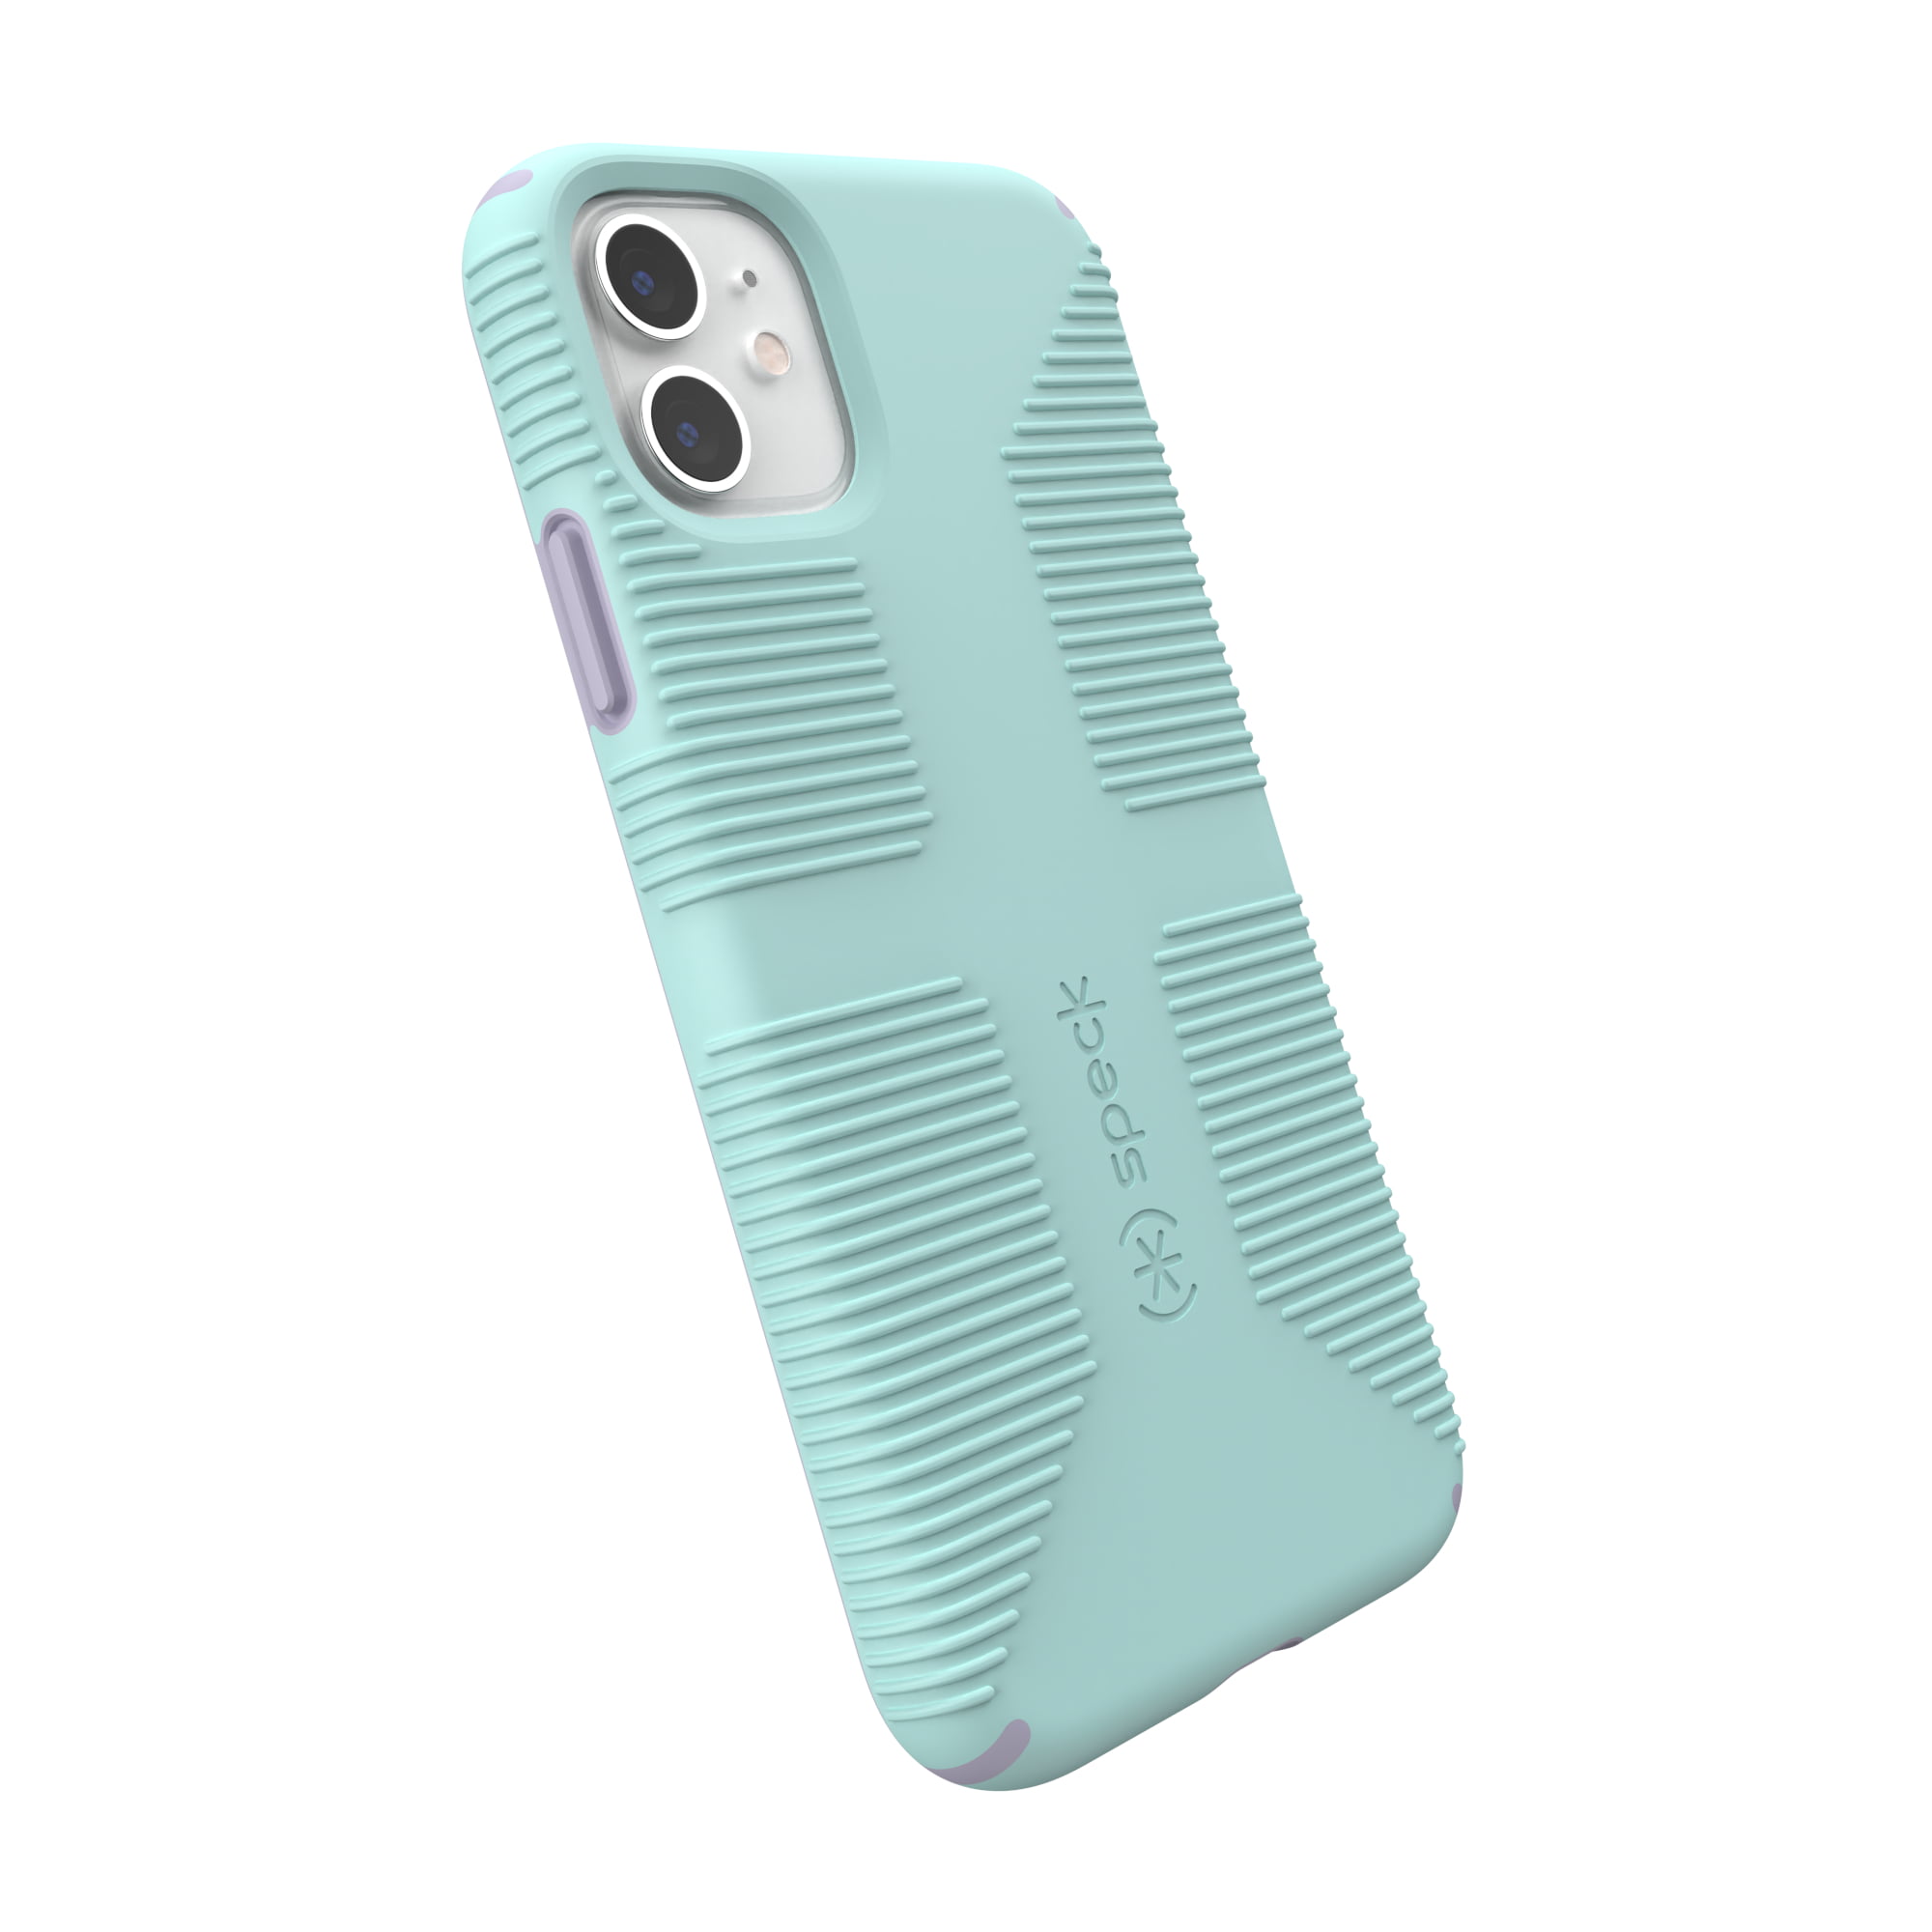 Speck iPhone XR Candyshell Grip Case, Purple & Blue 